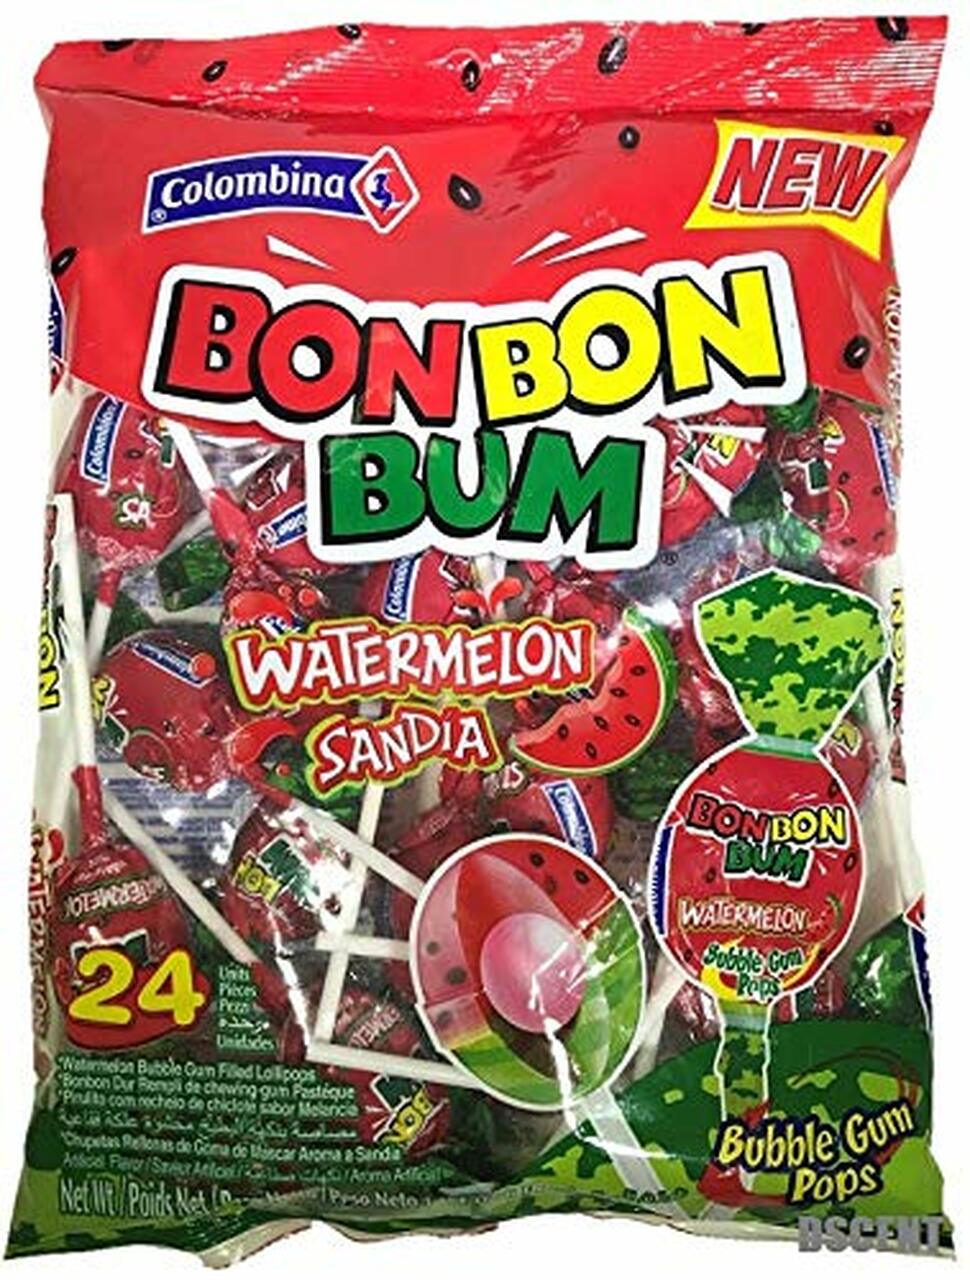 Colombina BonBon Bum Assorted sweets pk 24